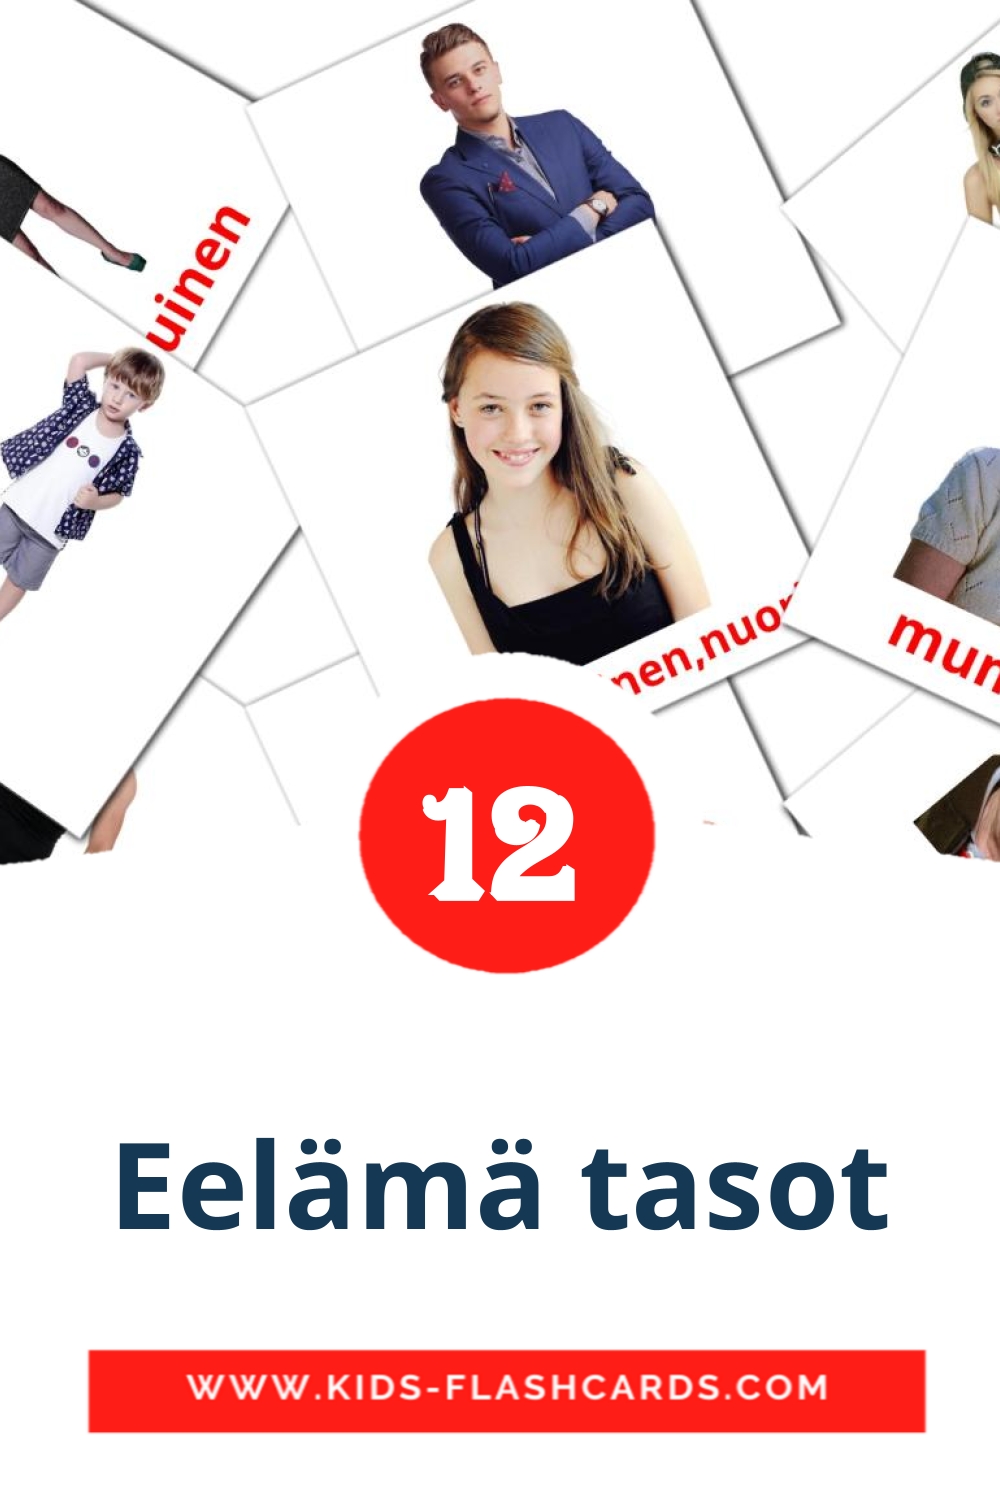 12 carte illustrate di Eelämä tasot per la scuola materna in finlandese